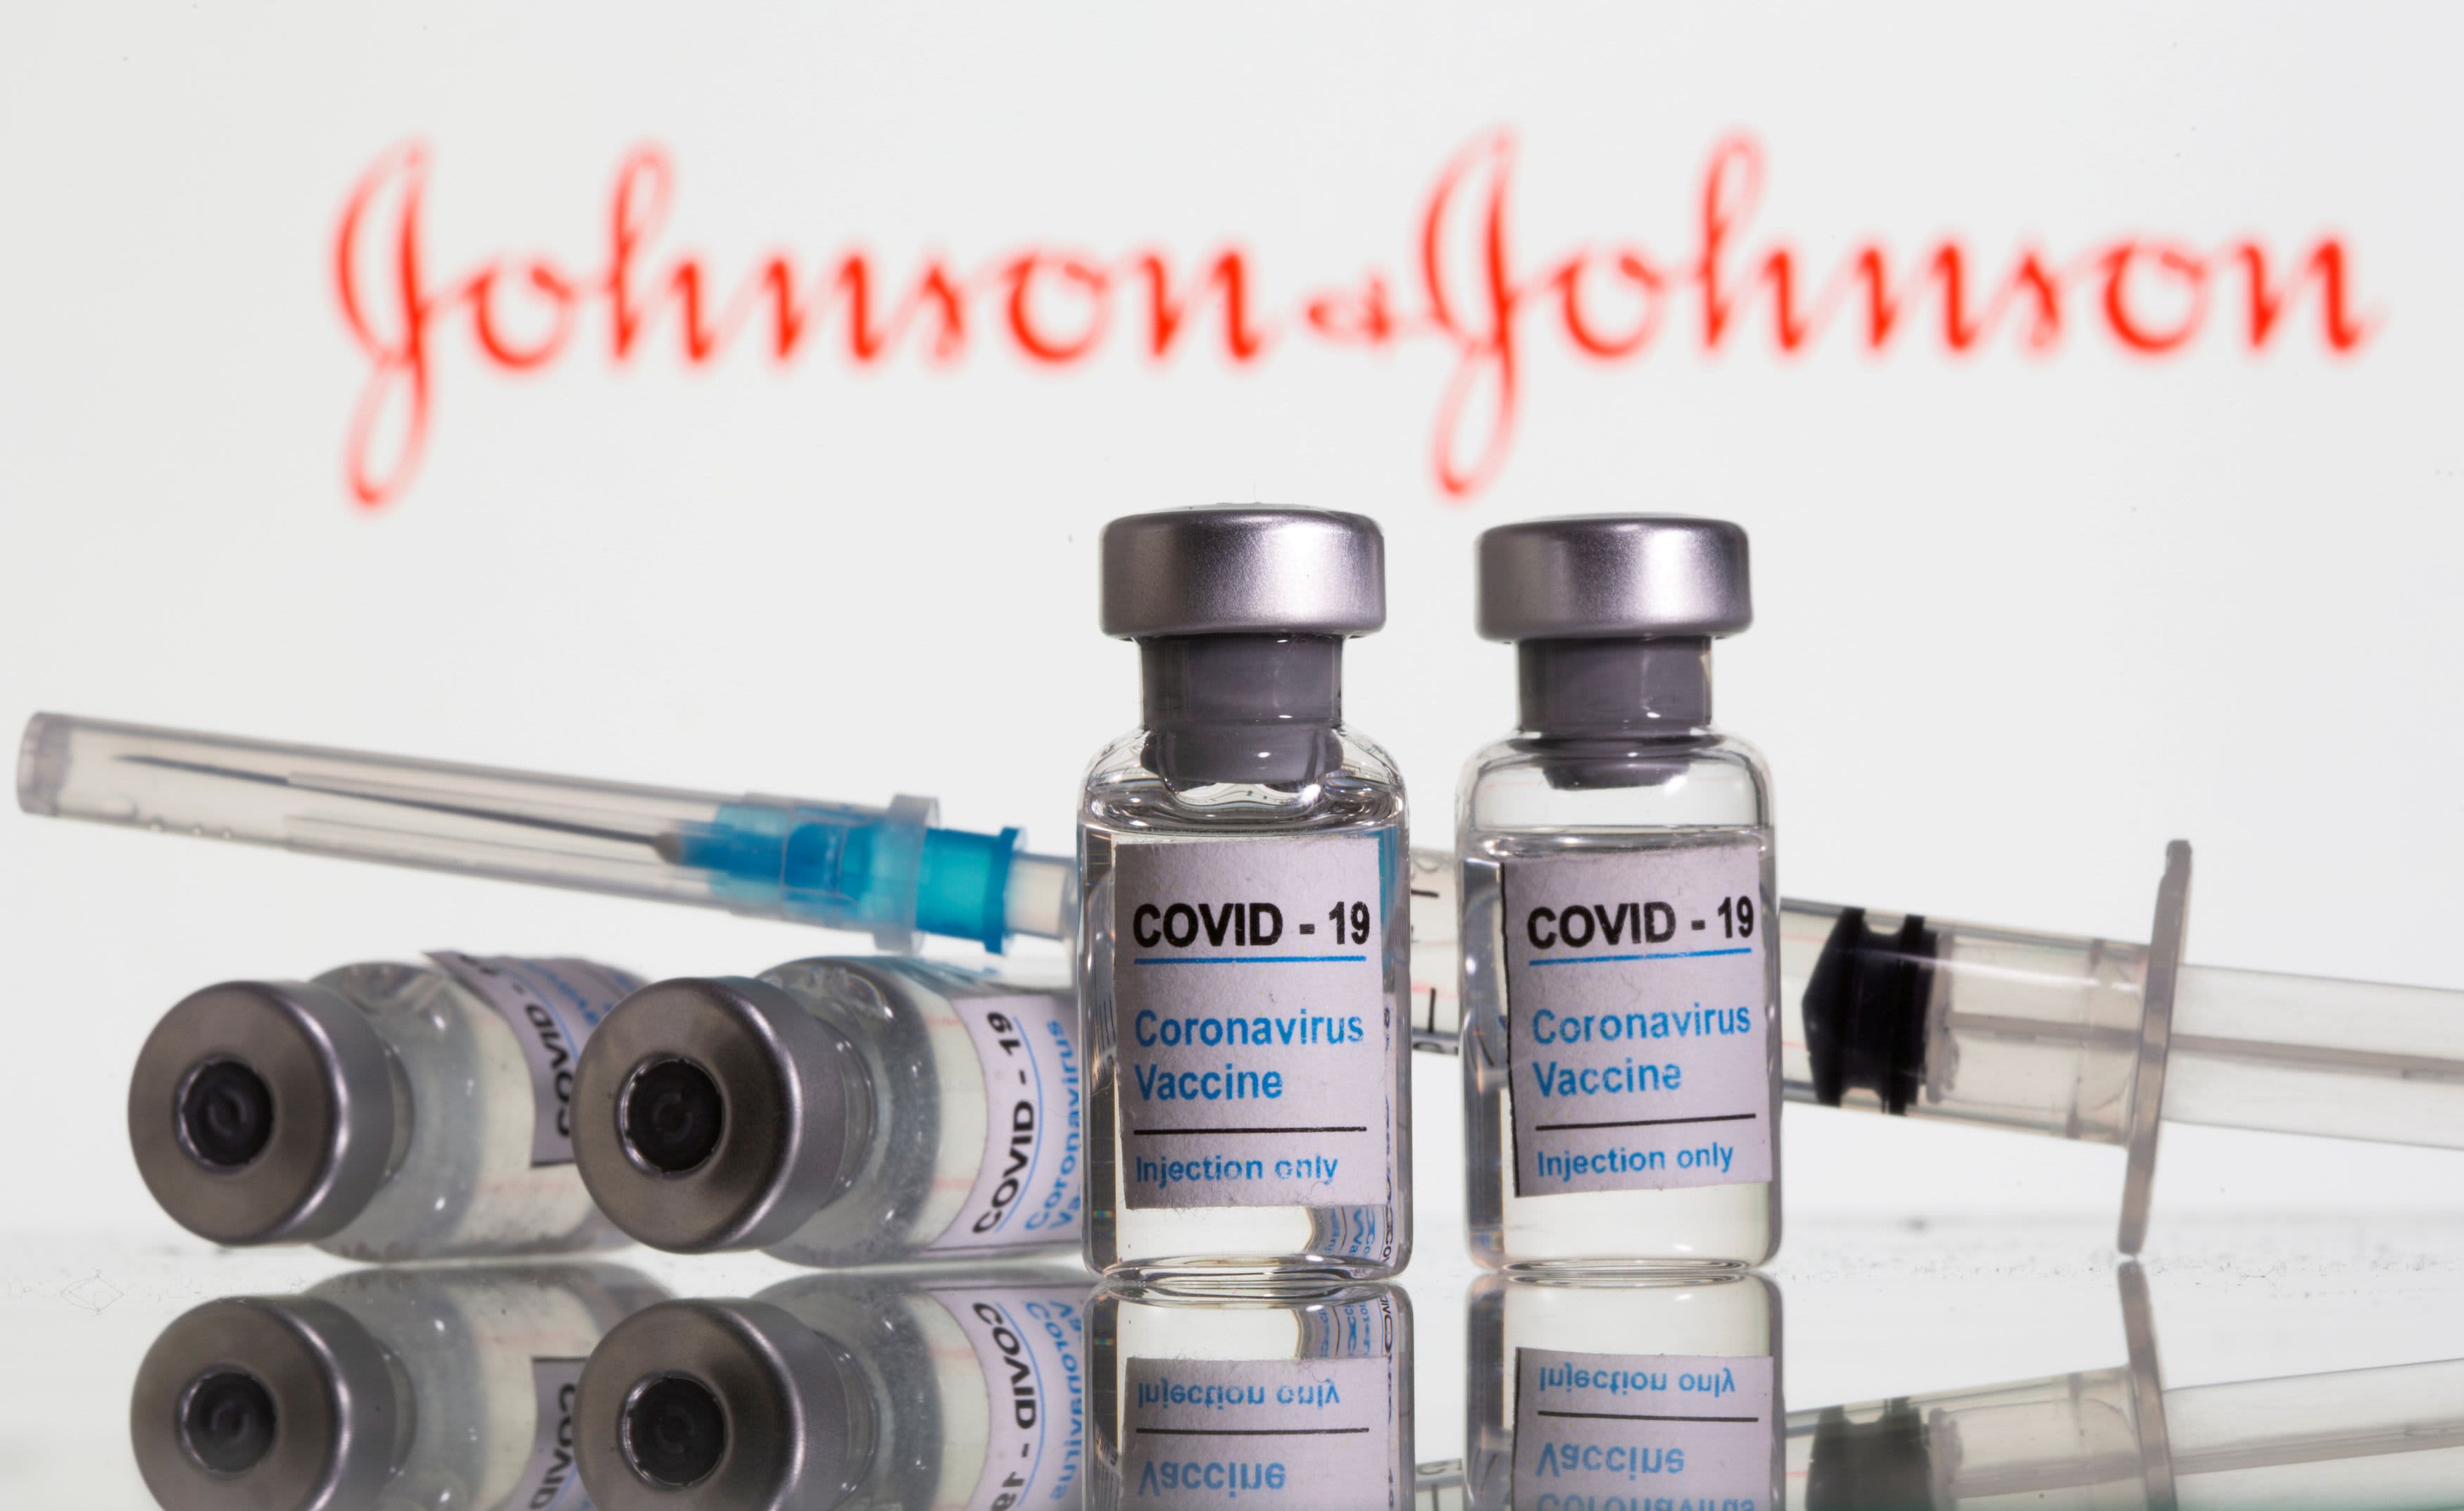 US states experience sharp decline in J&J vaccine